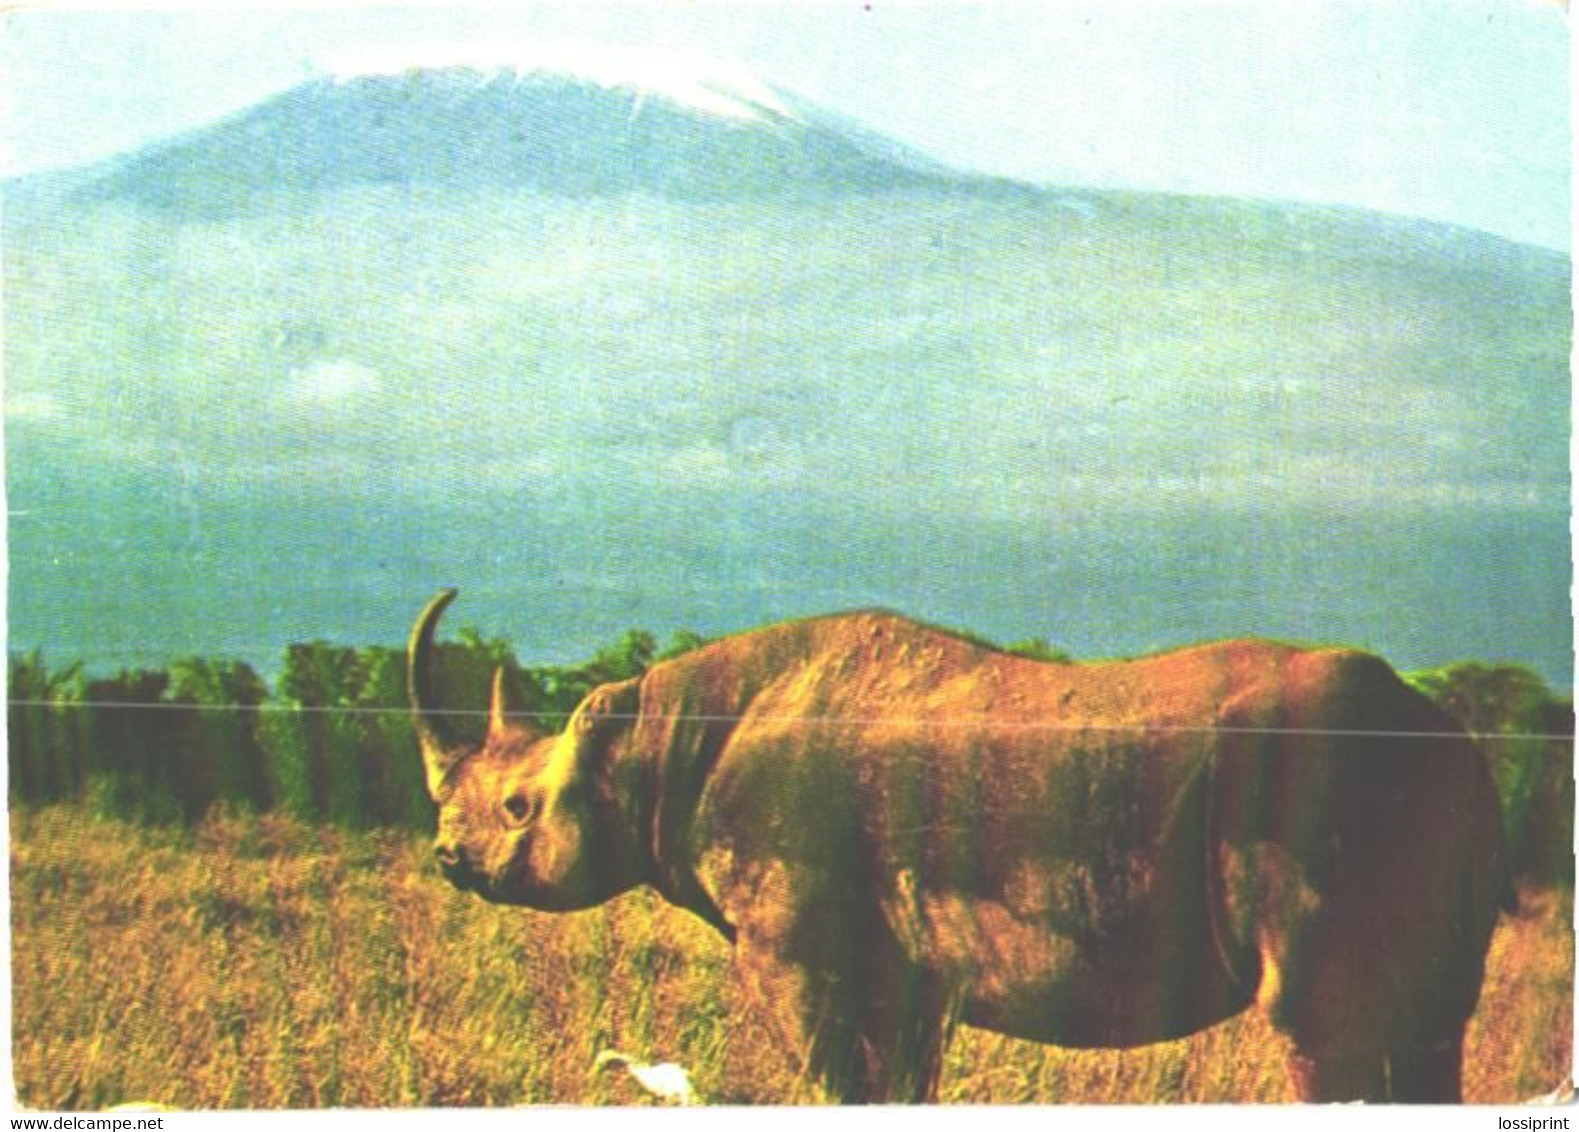 Rhinoceros And Kilimanjaro Volcano - Rhinoceros